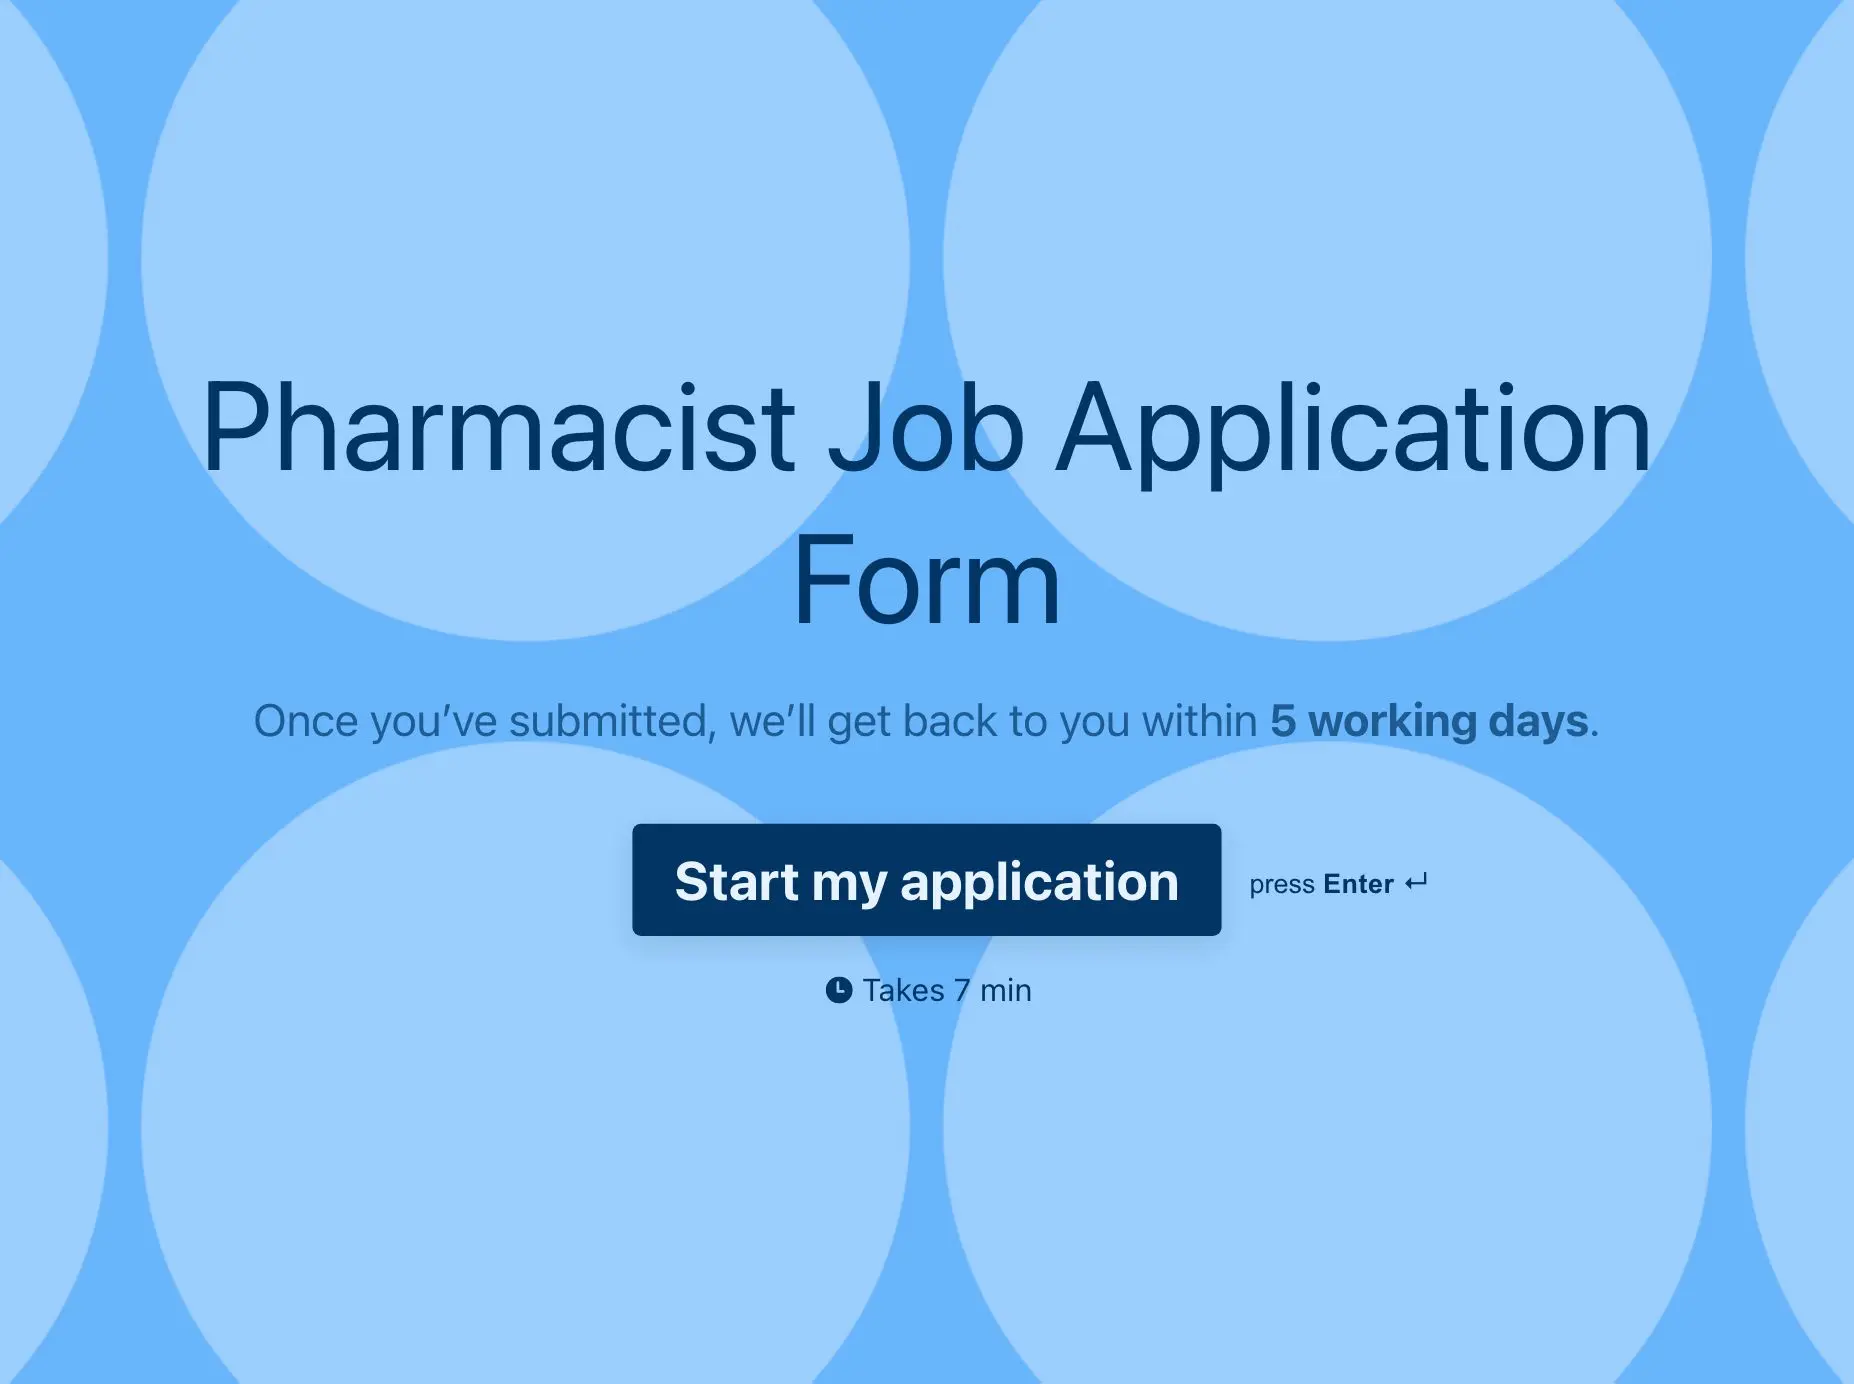 Pharmacist Job Application Form Template Hero